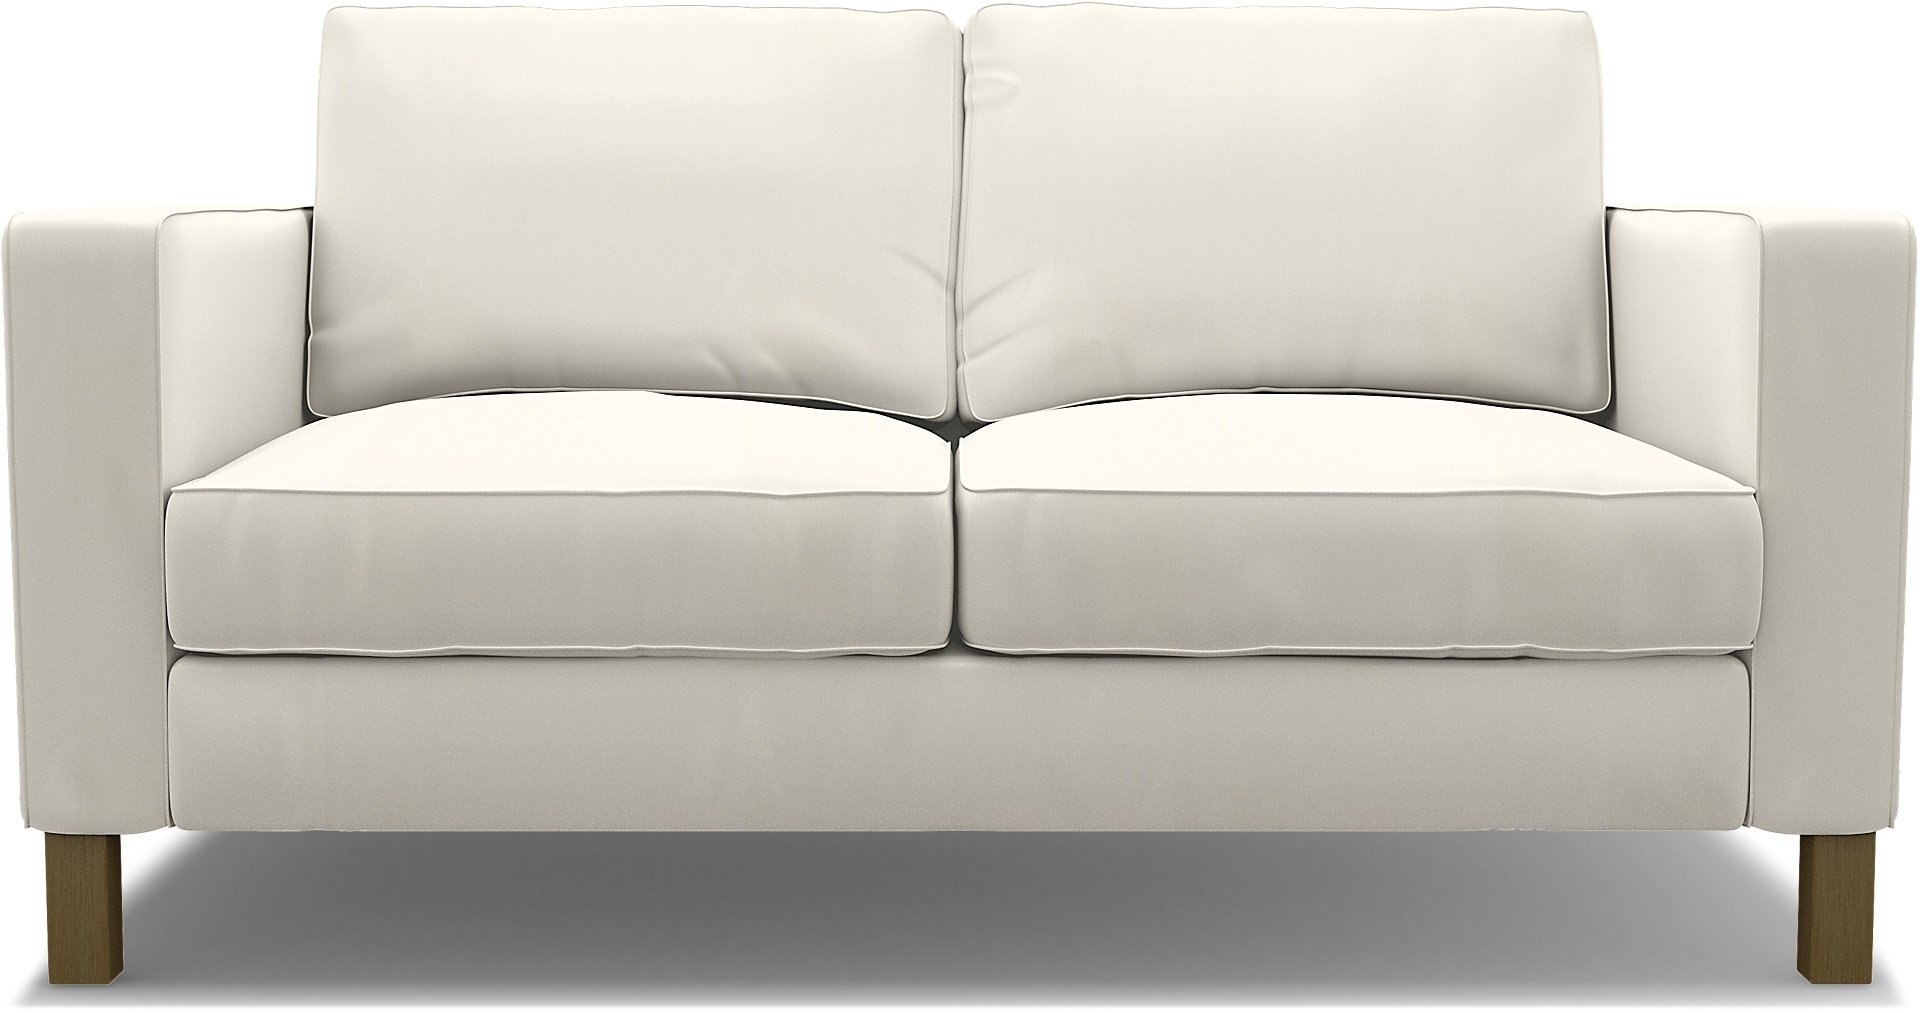 IKEA - Karlstad 2 Seater Sofa Cover, Mole Brown, Boucle & Texture - Bemz